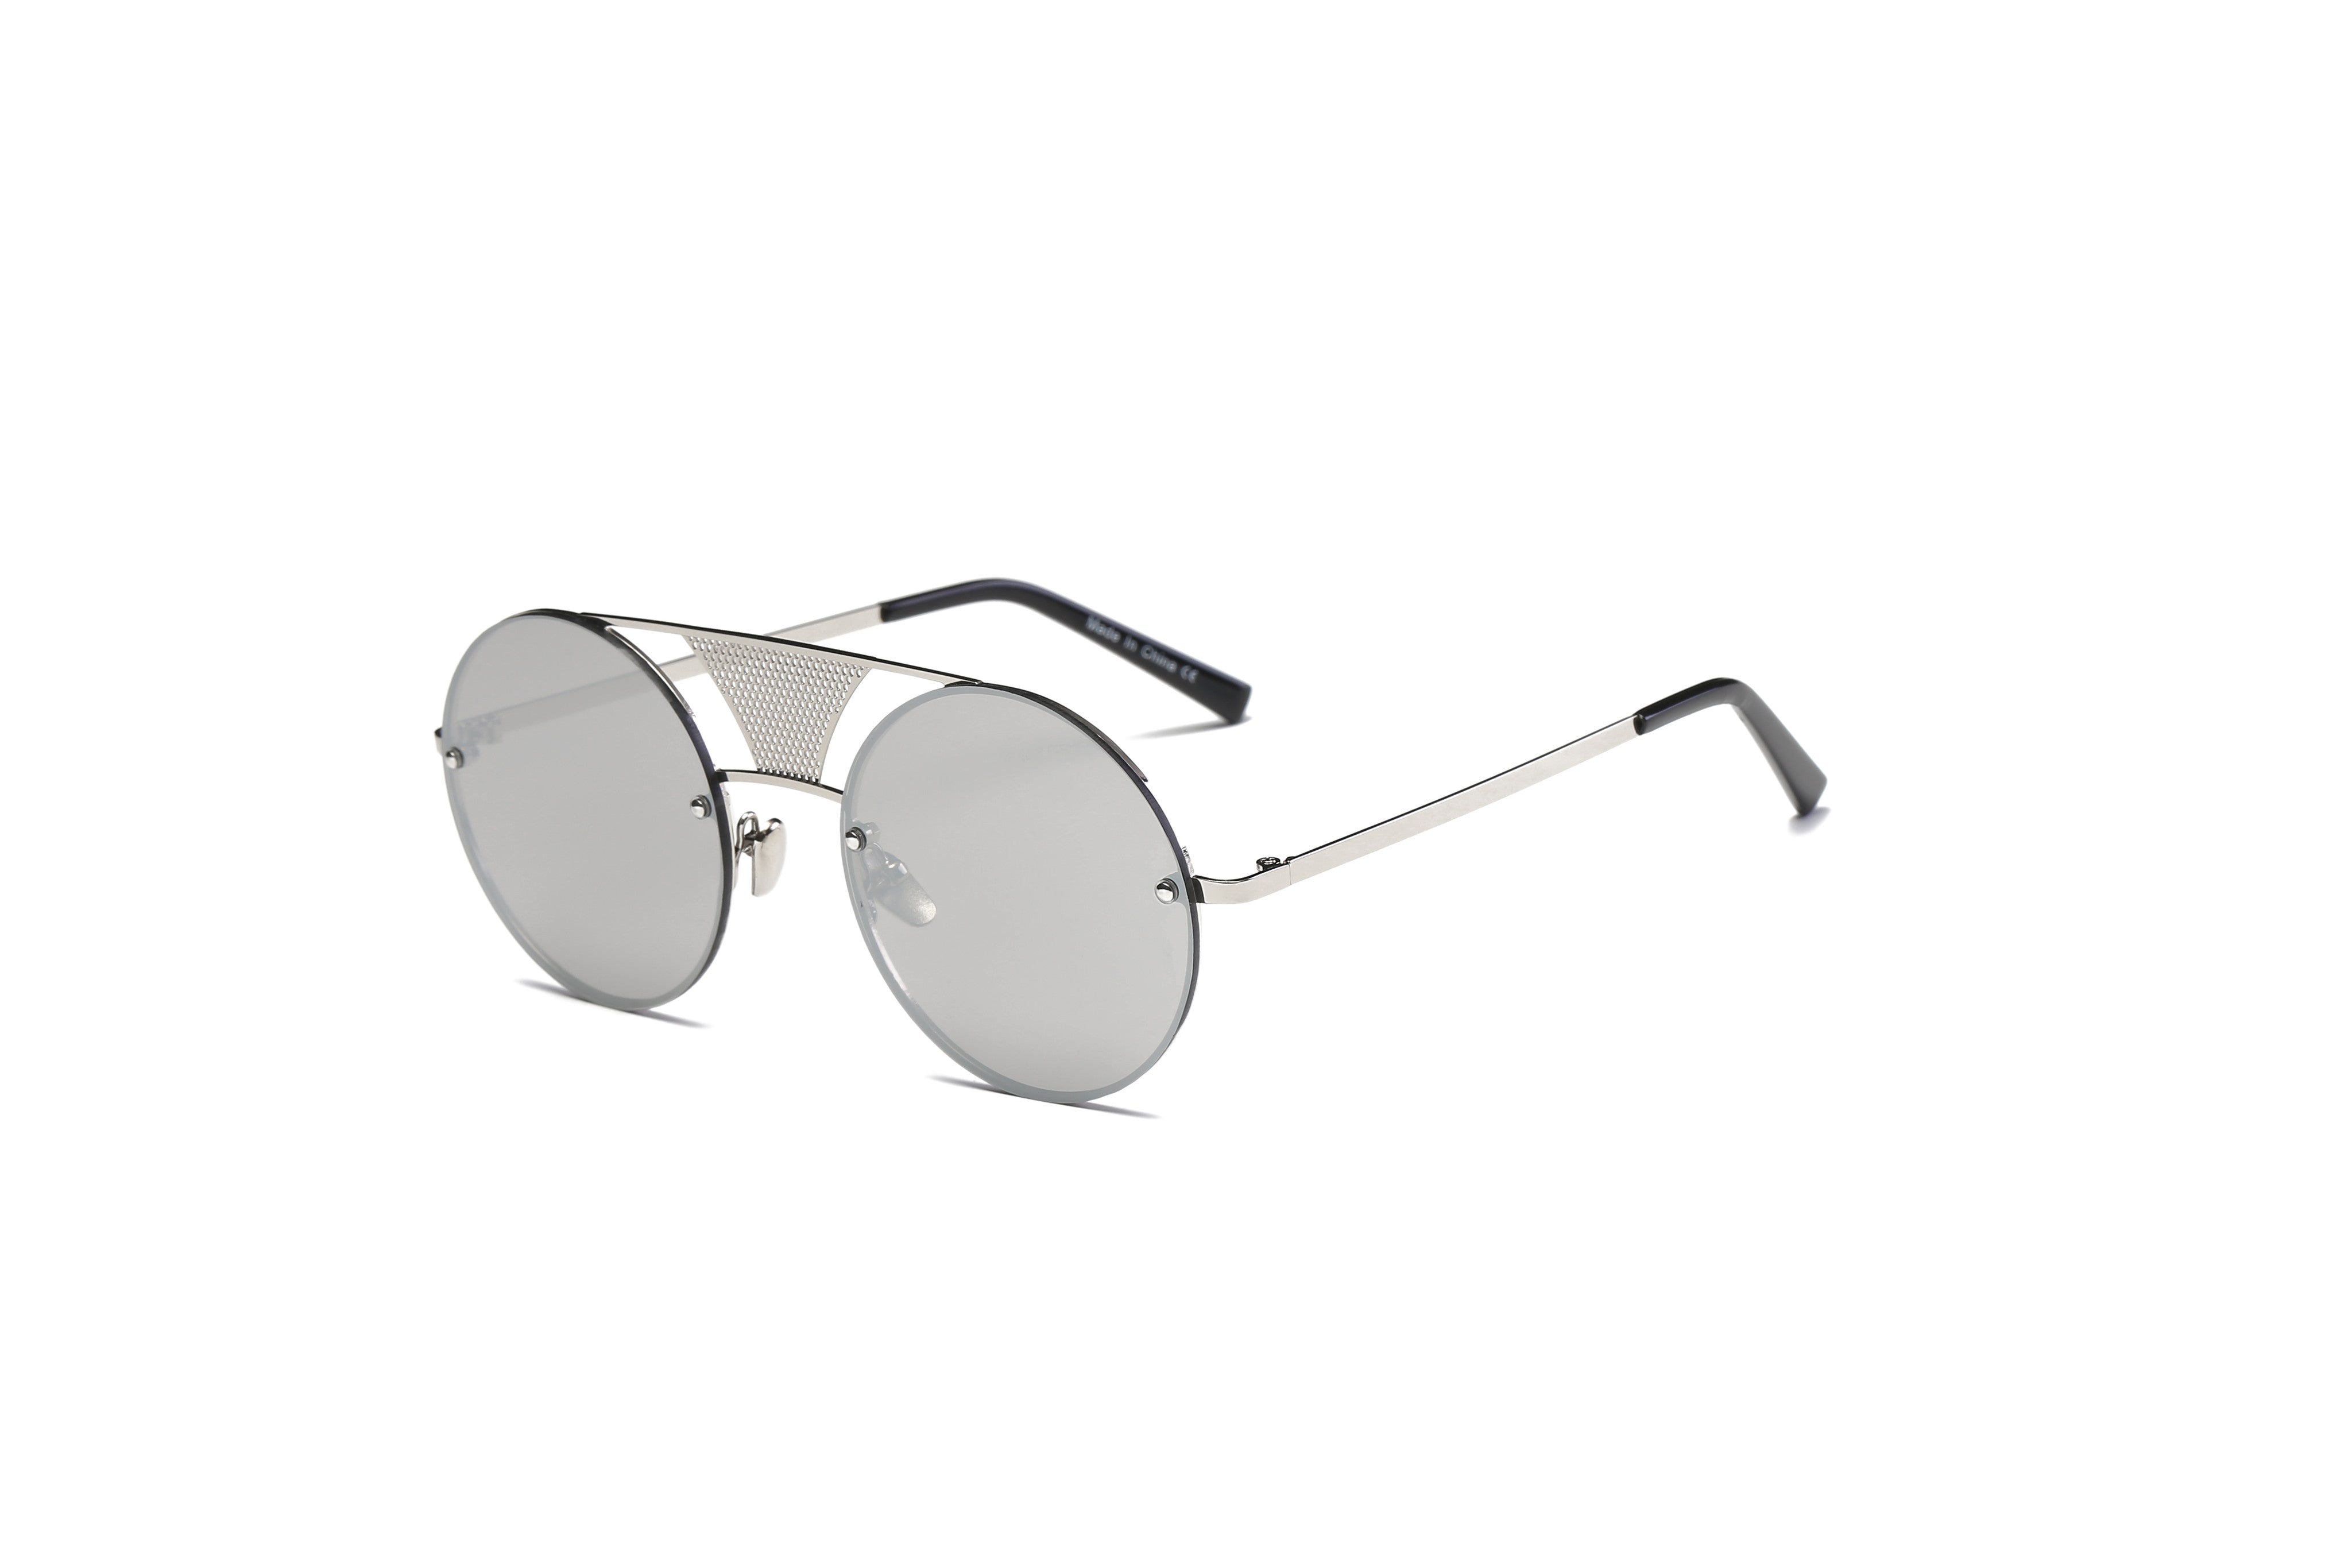 S2012 - Retro Round Brow-Bar Circle Fashion Wholesale Sunglasses Silver FRAME - Silver Lens